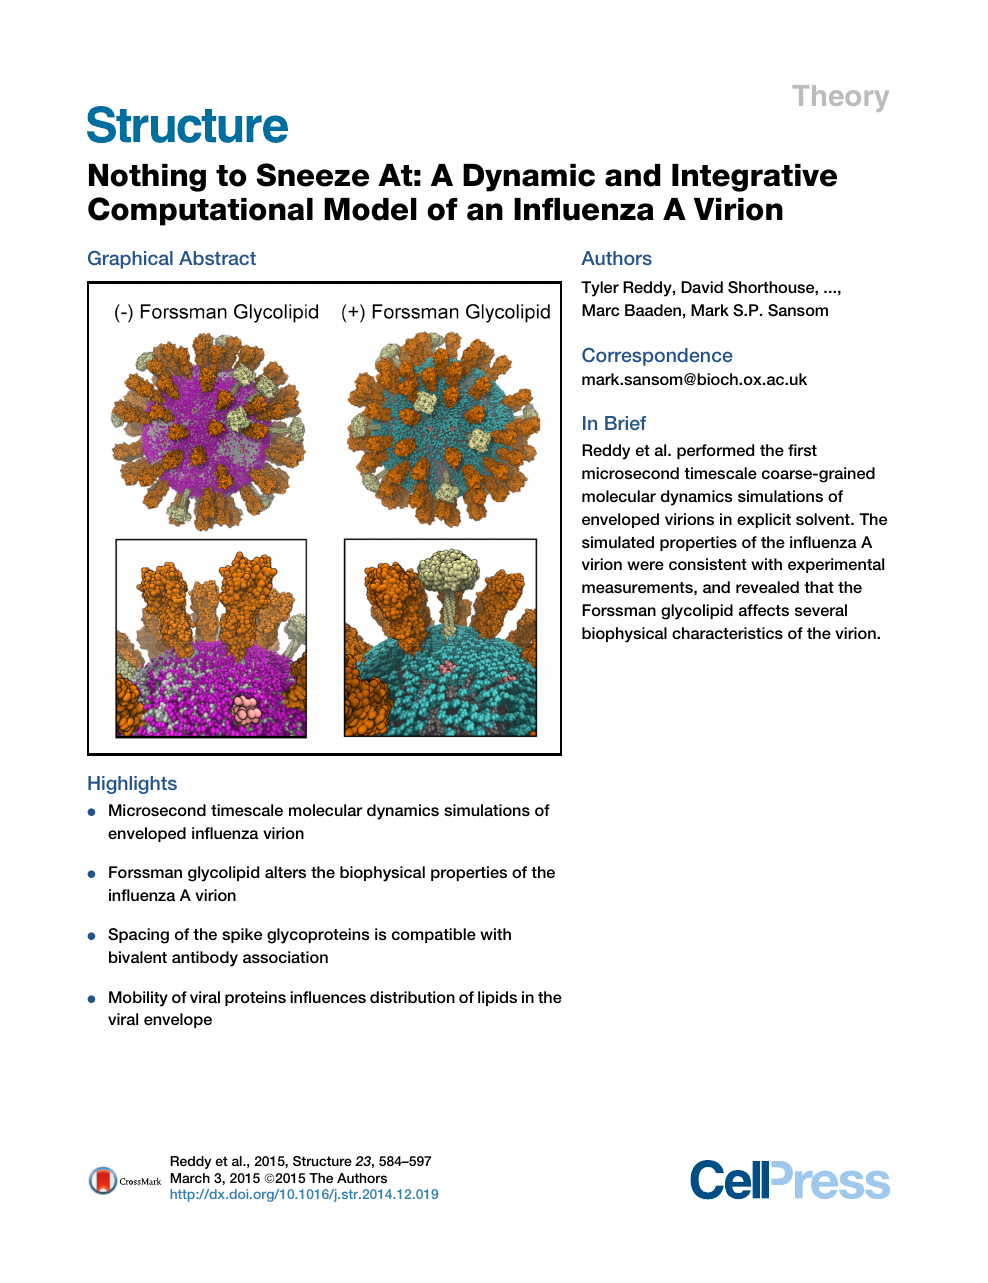 Understanding Virus Structure and Dynamics through Molecular Simulations